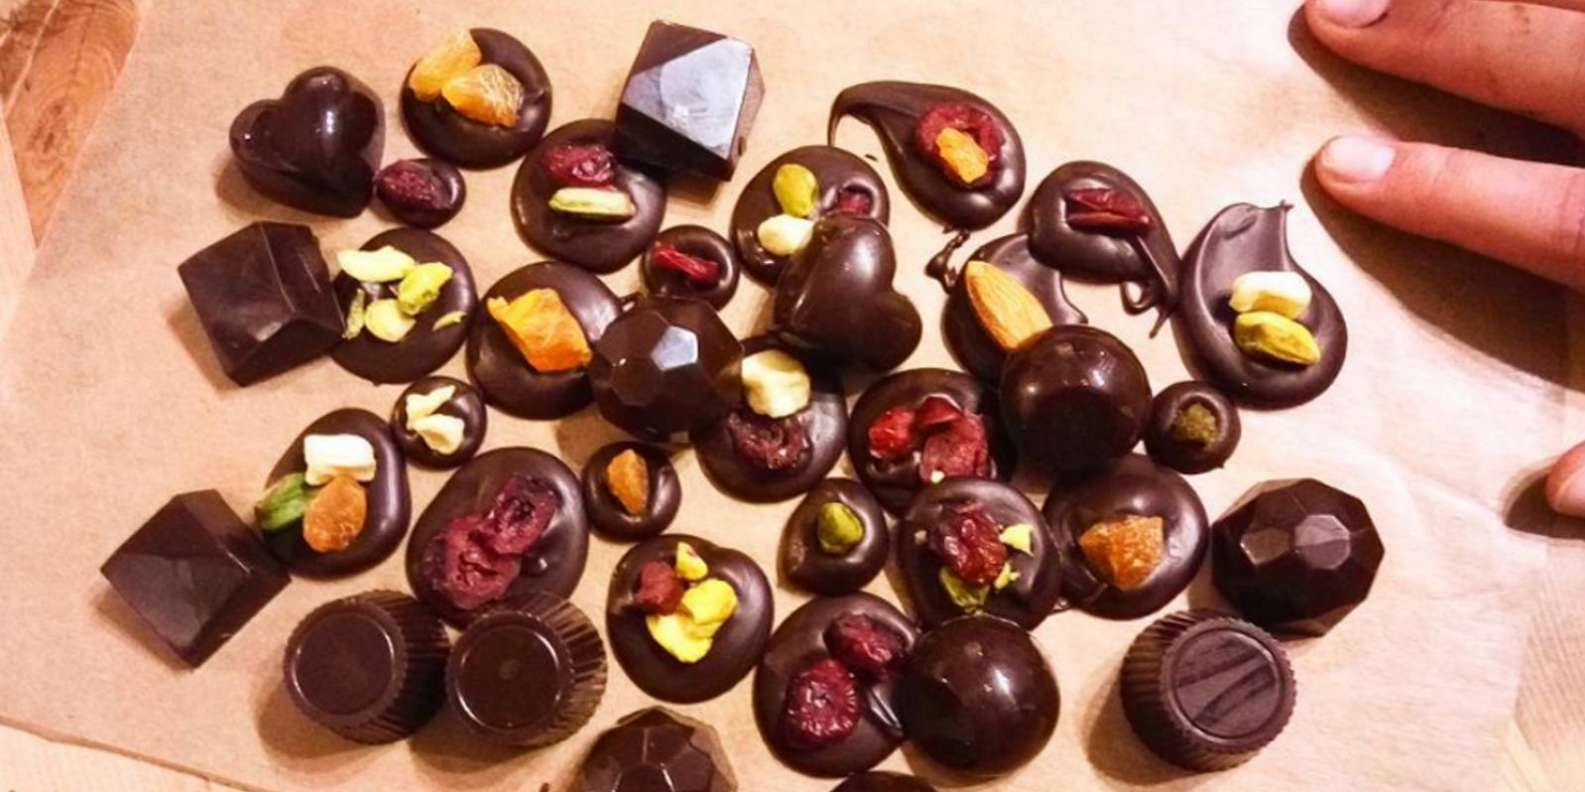 Chocolate party kit % % % % - % % % % R&M Fine Chocolate % %